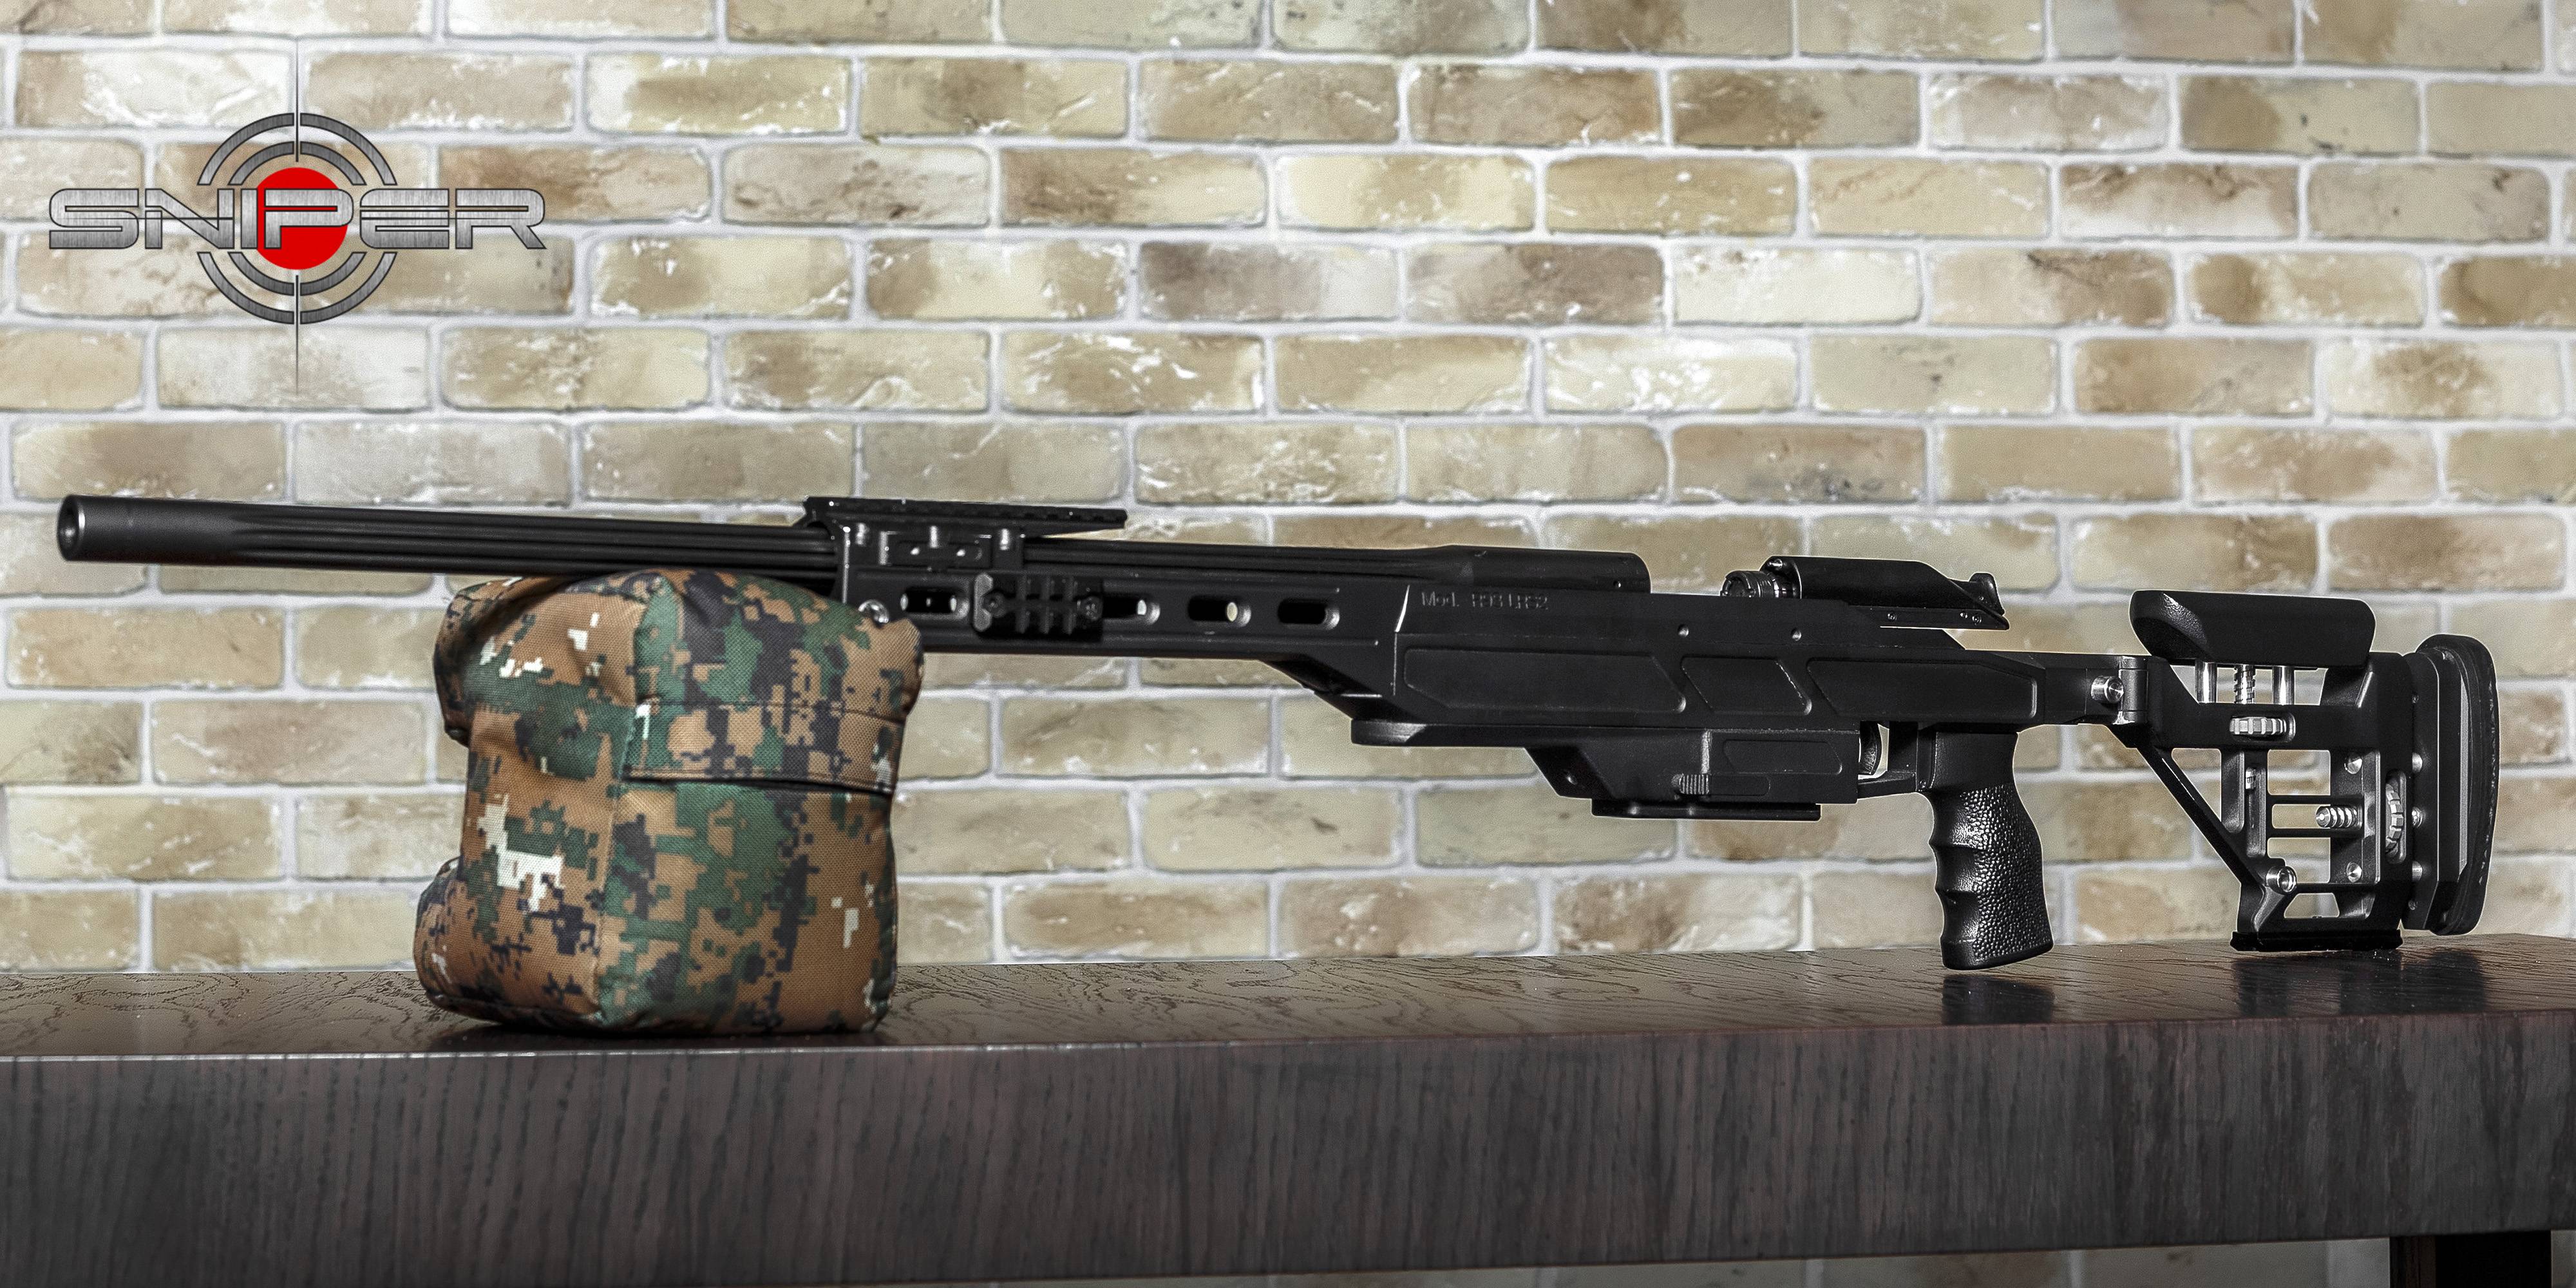 Beretta m 93r пистолет - характеристики, фото, ттх